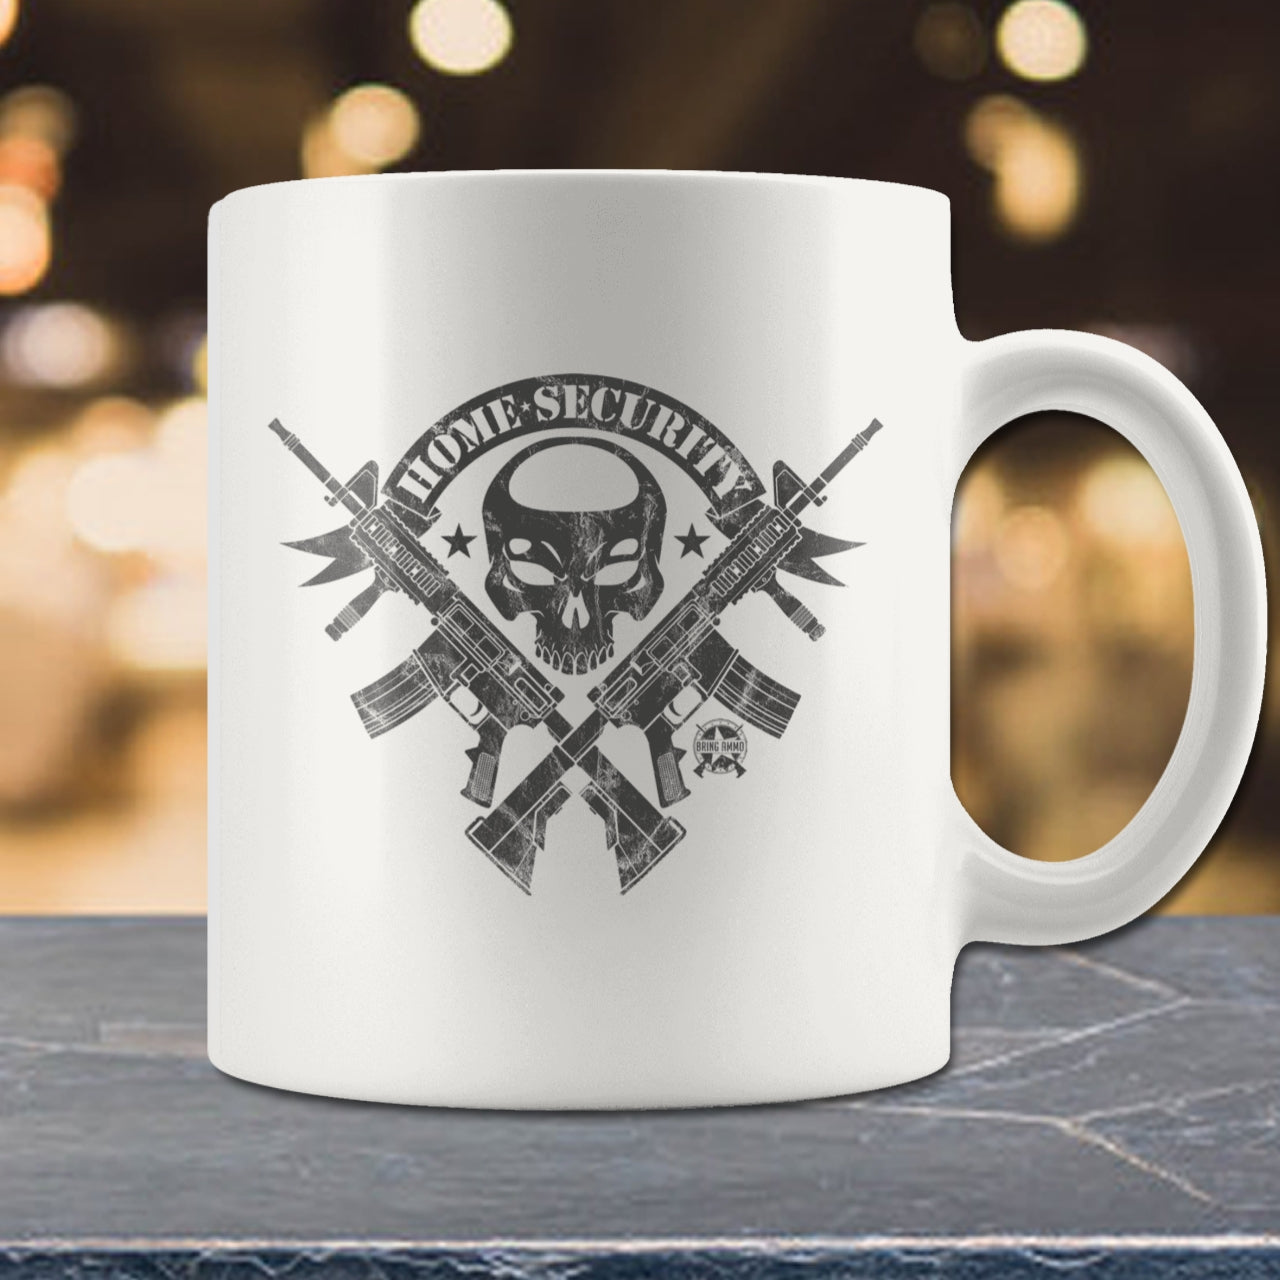 Home Security - Coffee Mug Drinkware Home Security 